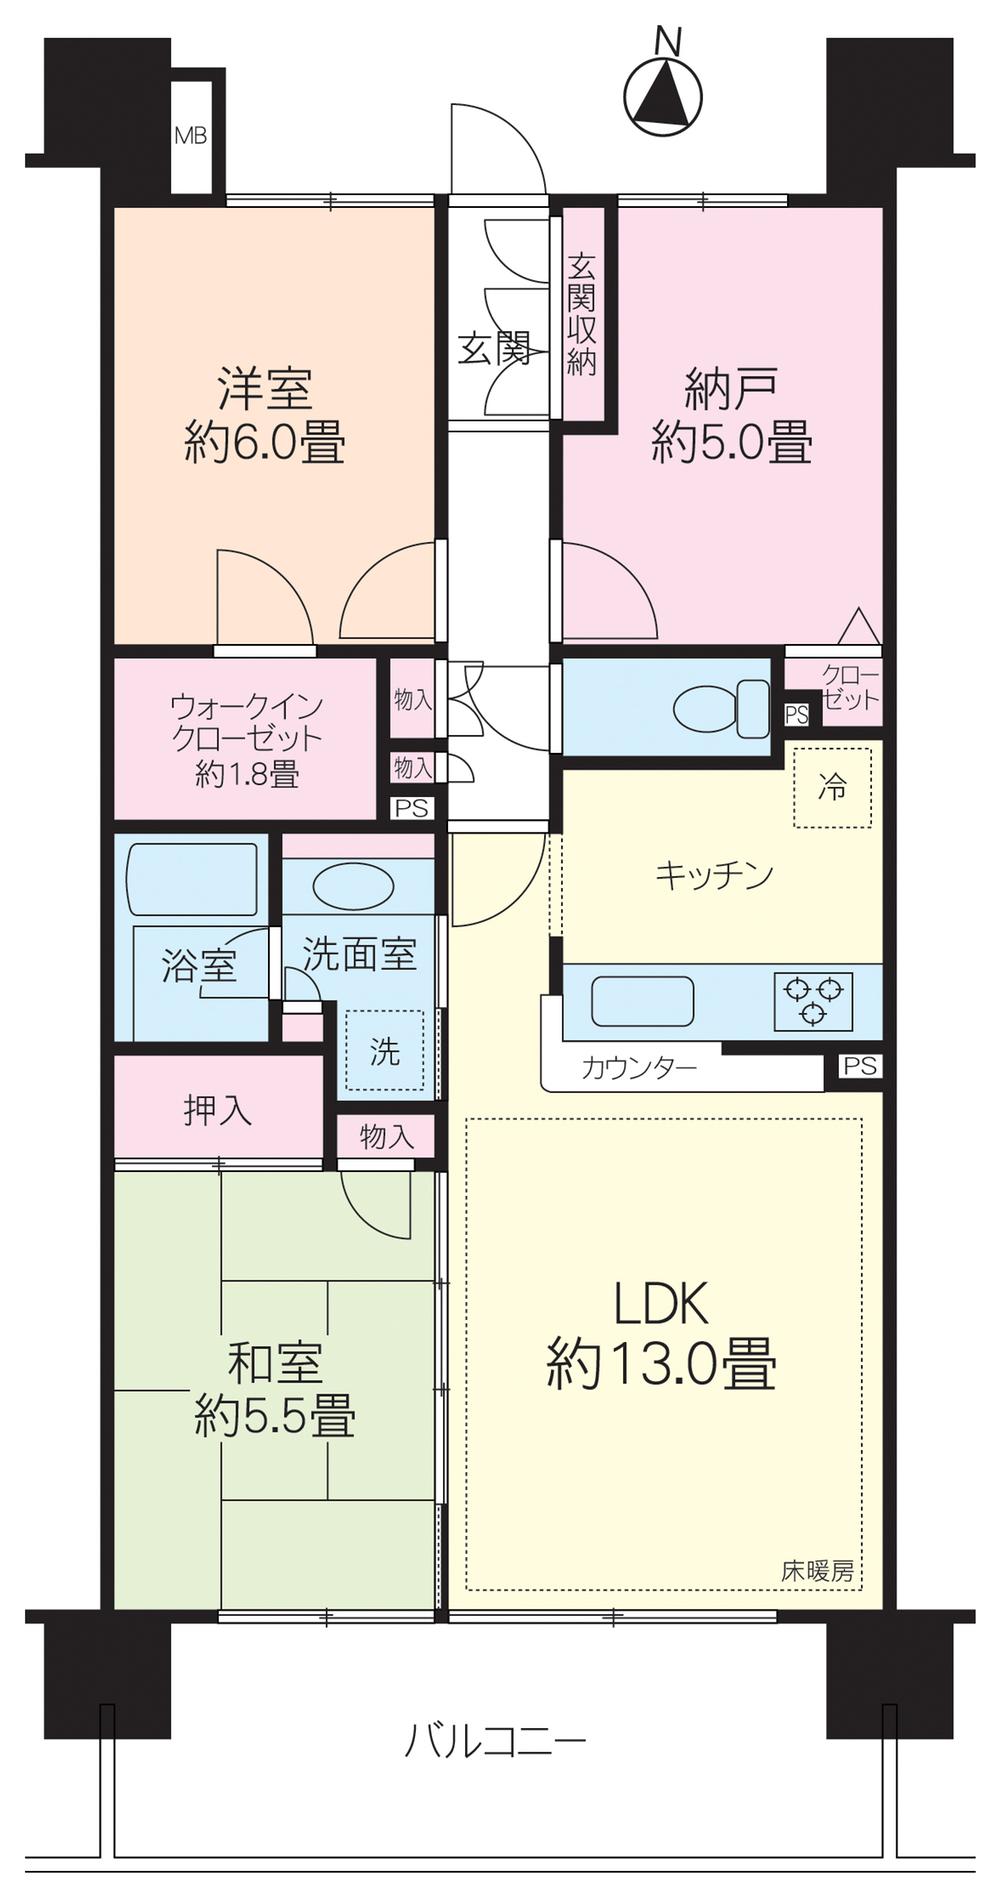 Floor plan. 2LDK + S (storeroom), Price 32,800,000 yen, Occupied area 66.86 sq m , Balcony area 11.8 sq m